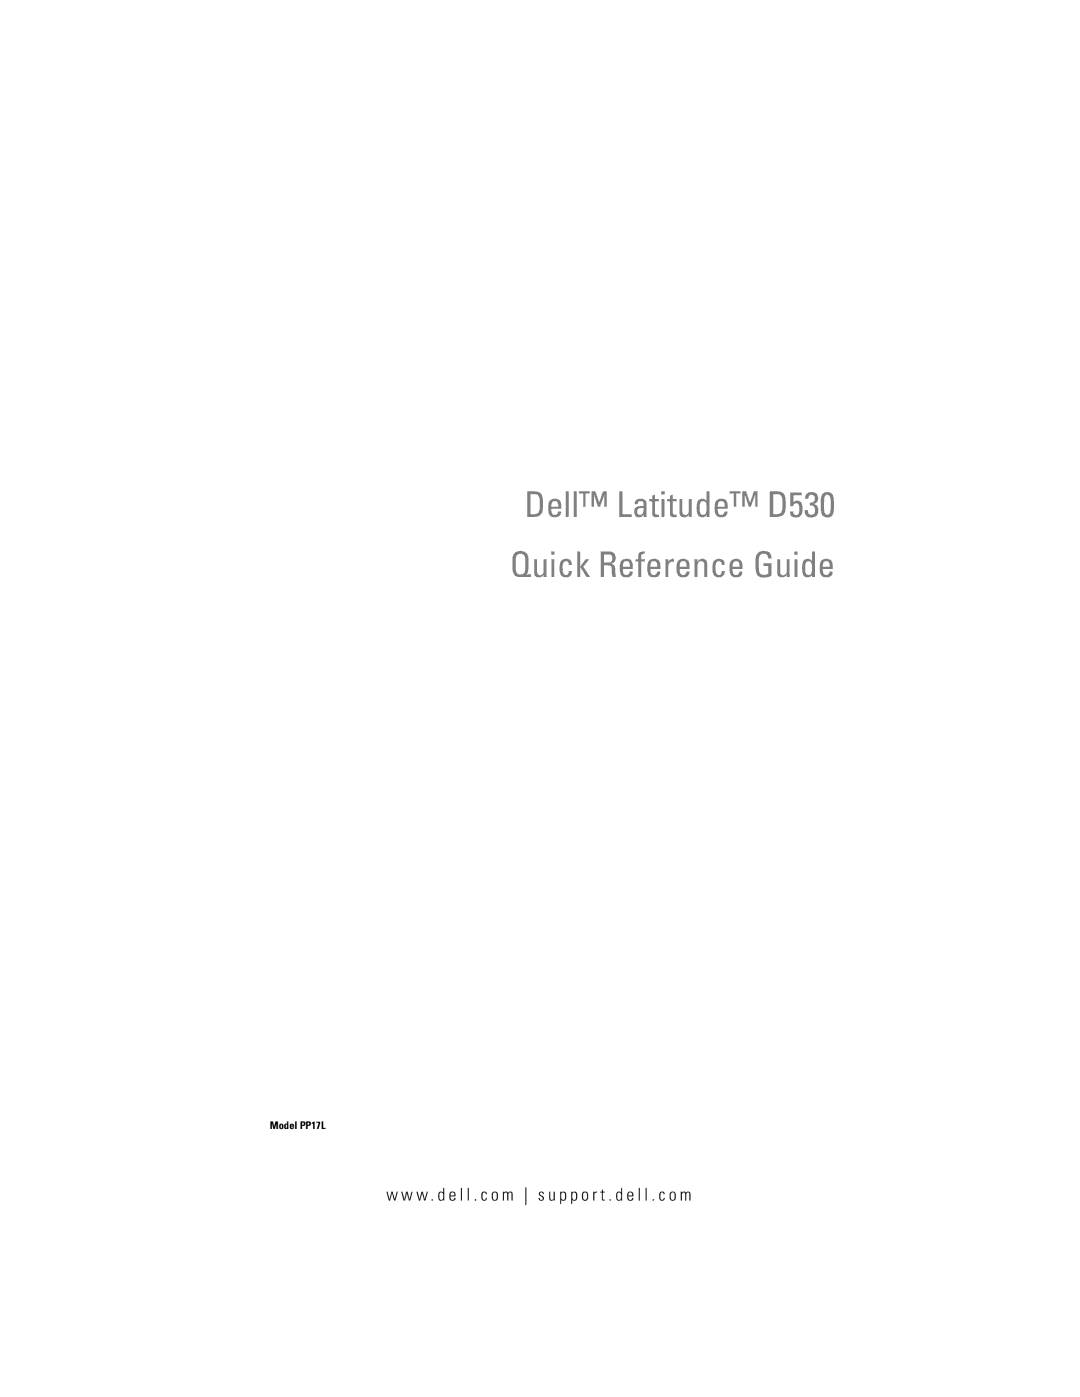 Dell PT052 manual Dell Latitude D530 Quick Reference Guide, W . d e l l . c o m s u p p o r t . d e l l . c o m 